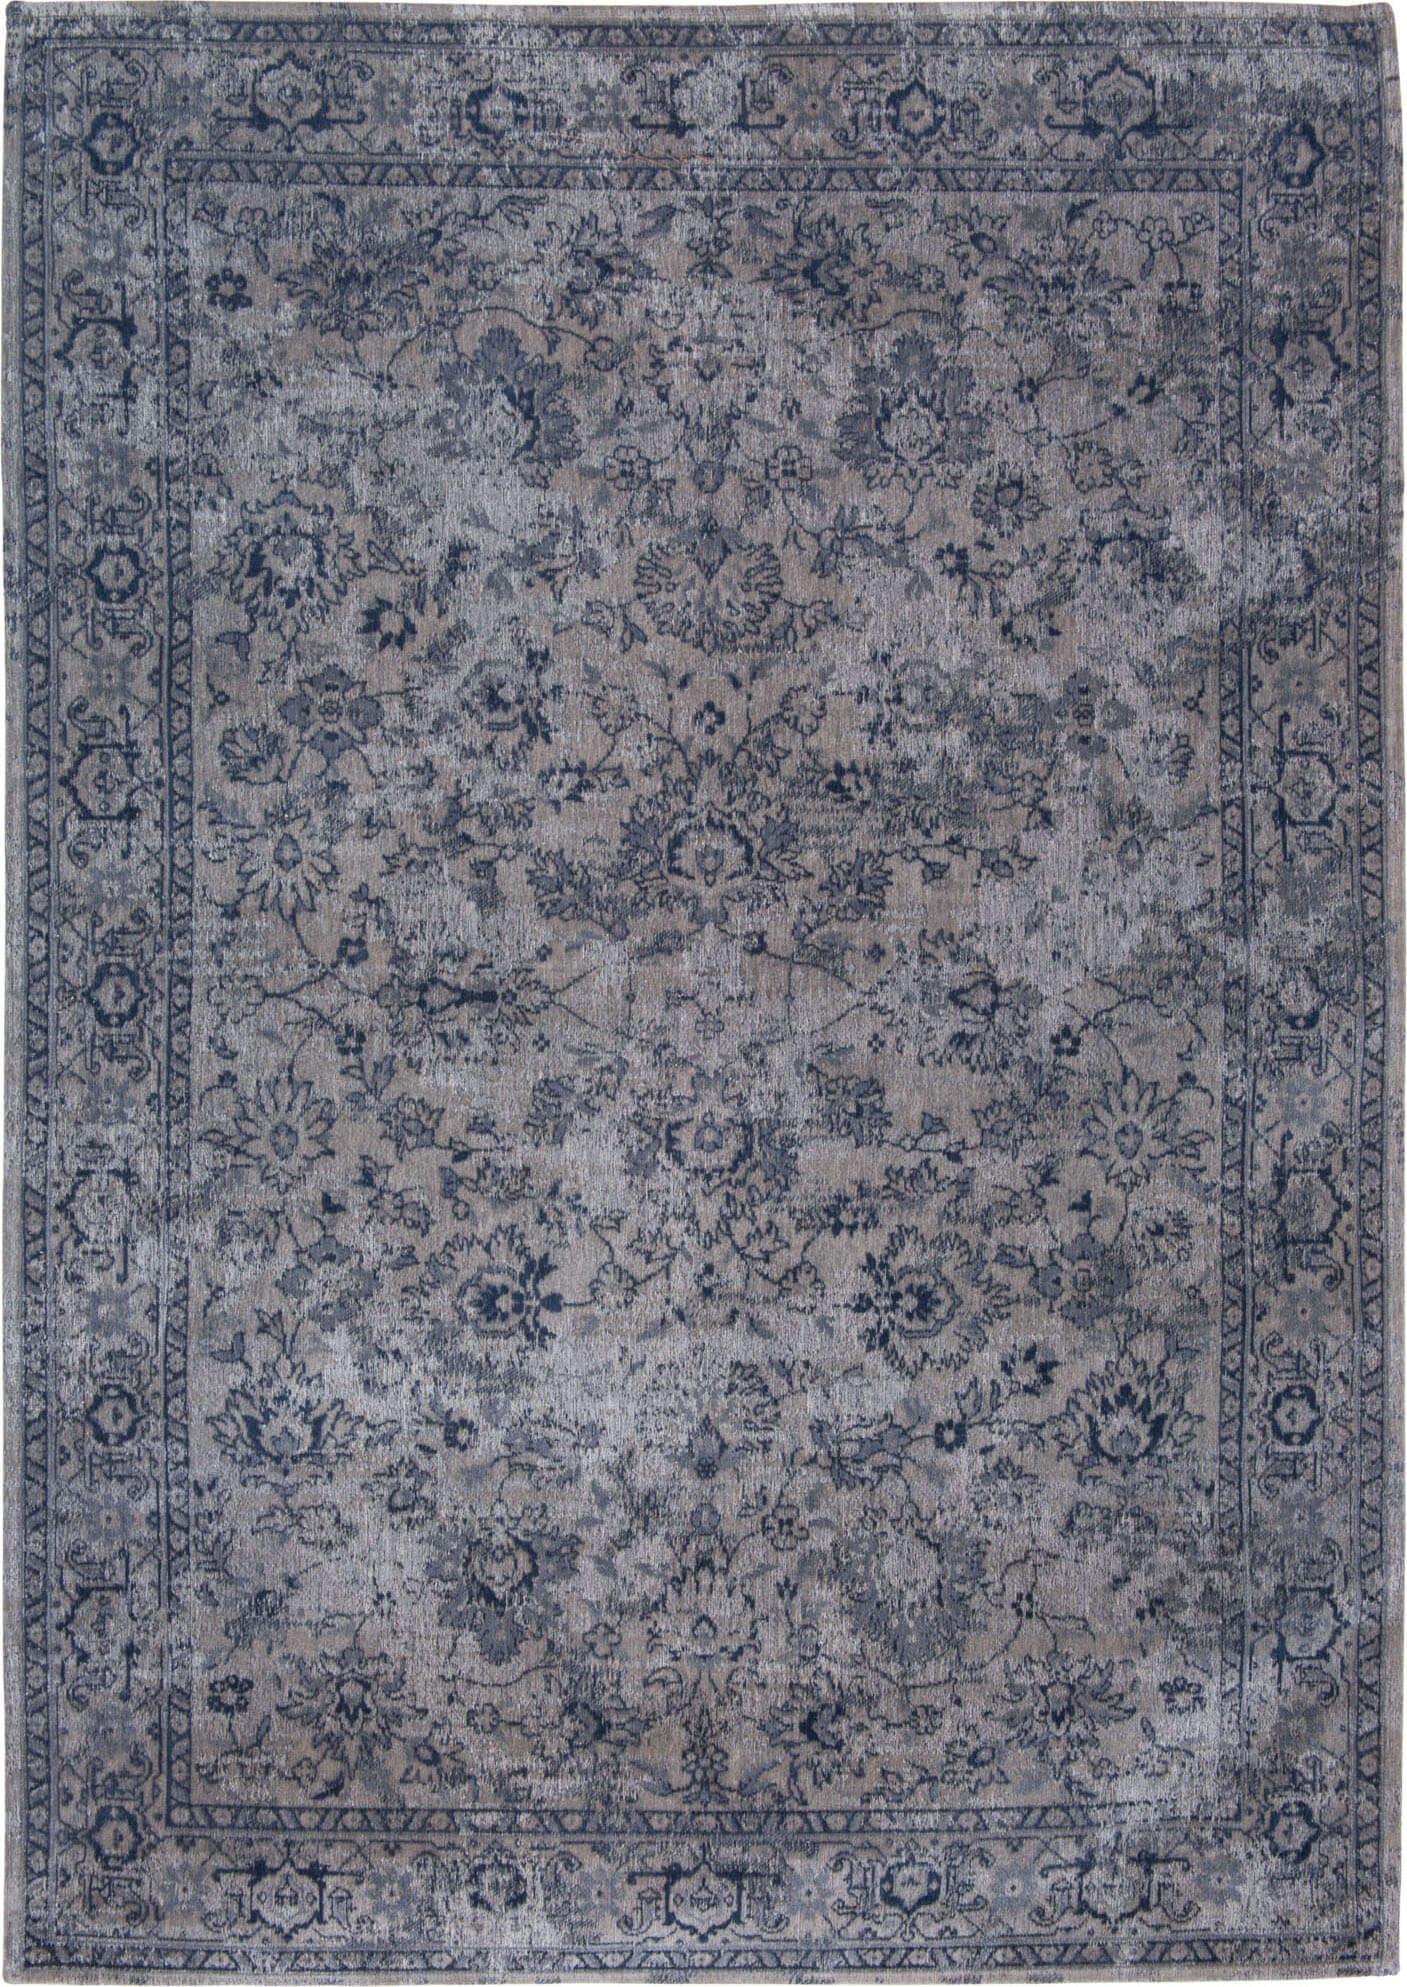 Slate Blue Bright Persian Vintage Rug ☞ Size: 60 x 90 cm